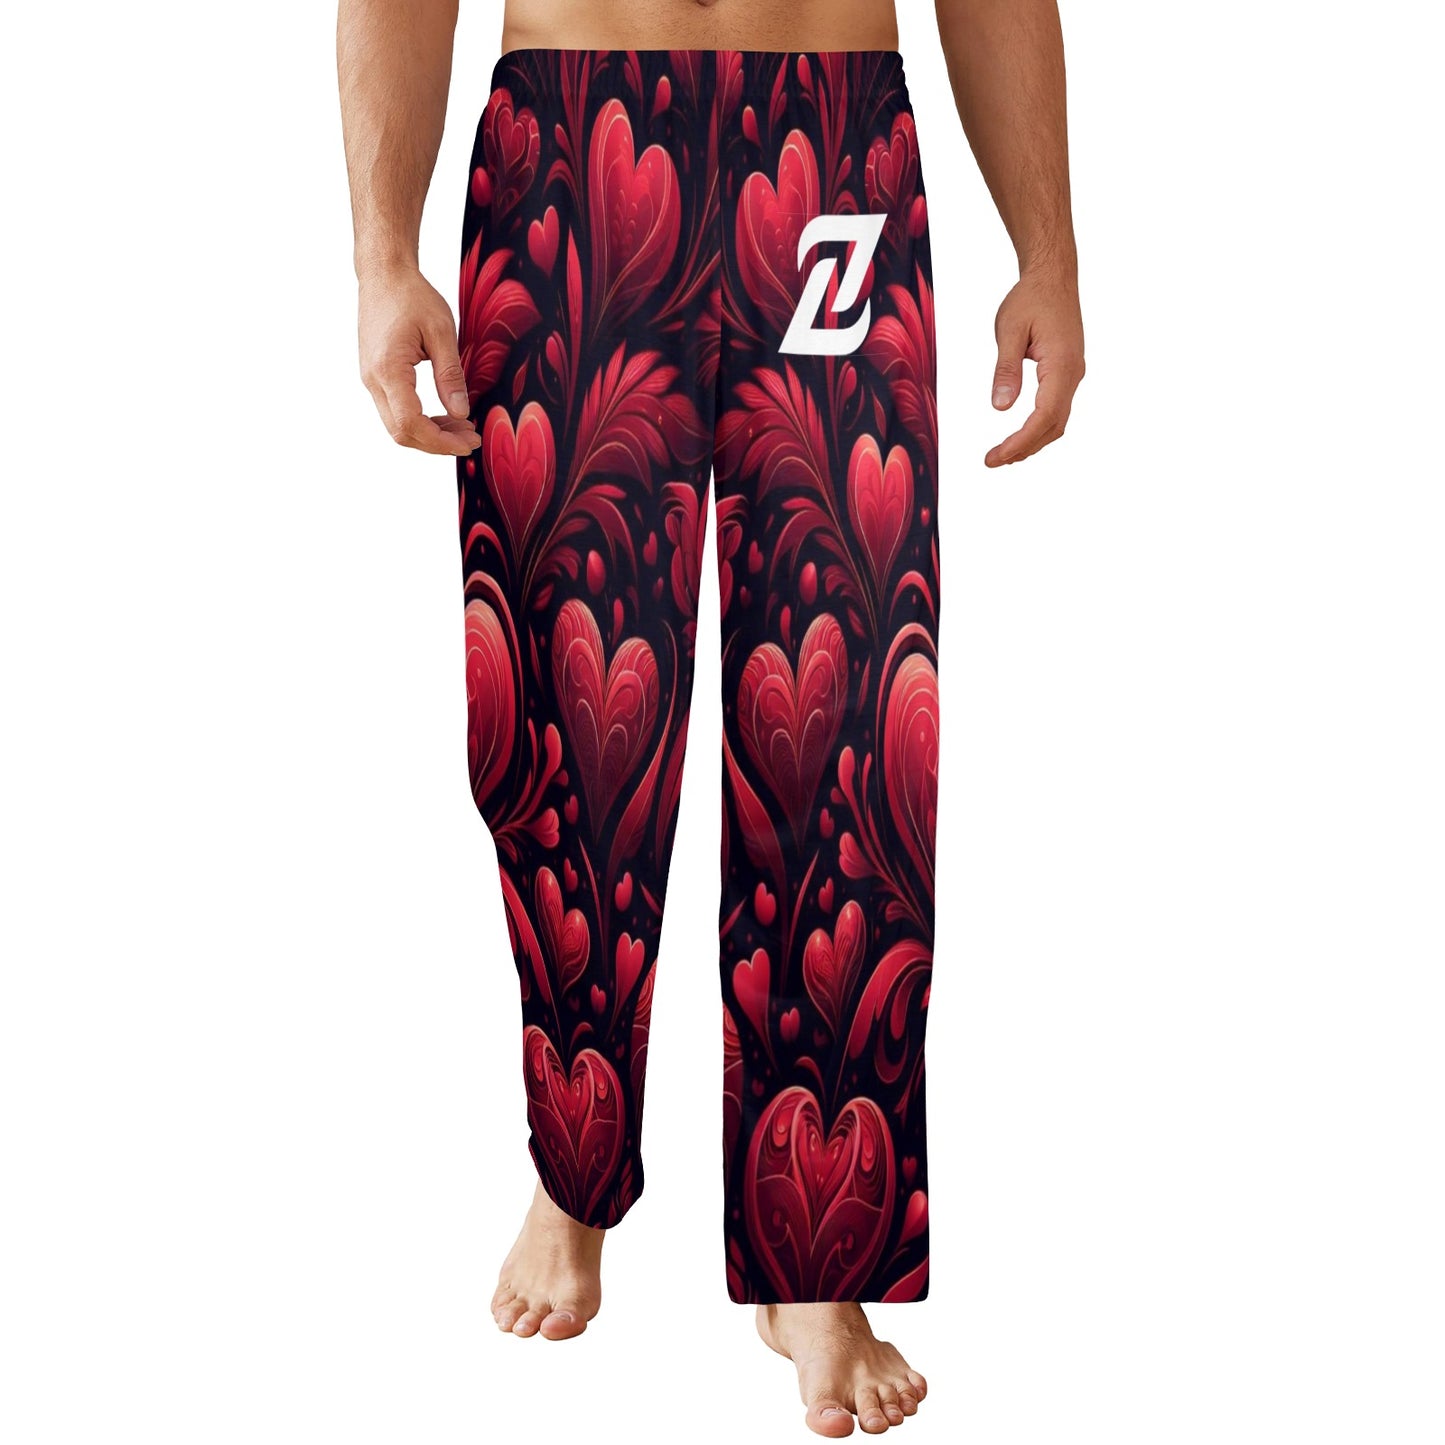 Zen Pajama Pants - Valentines